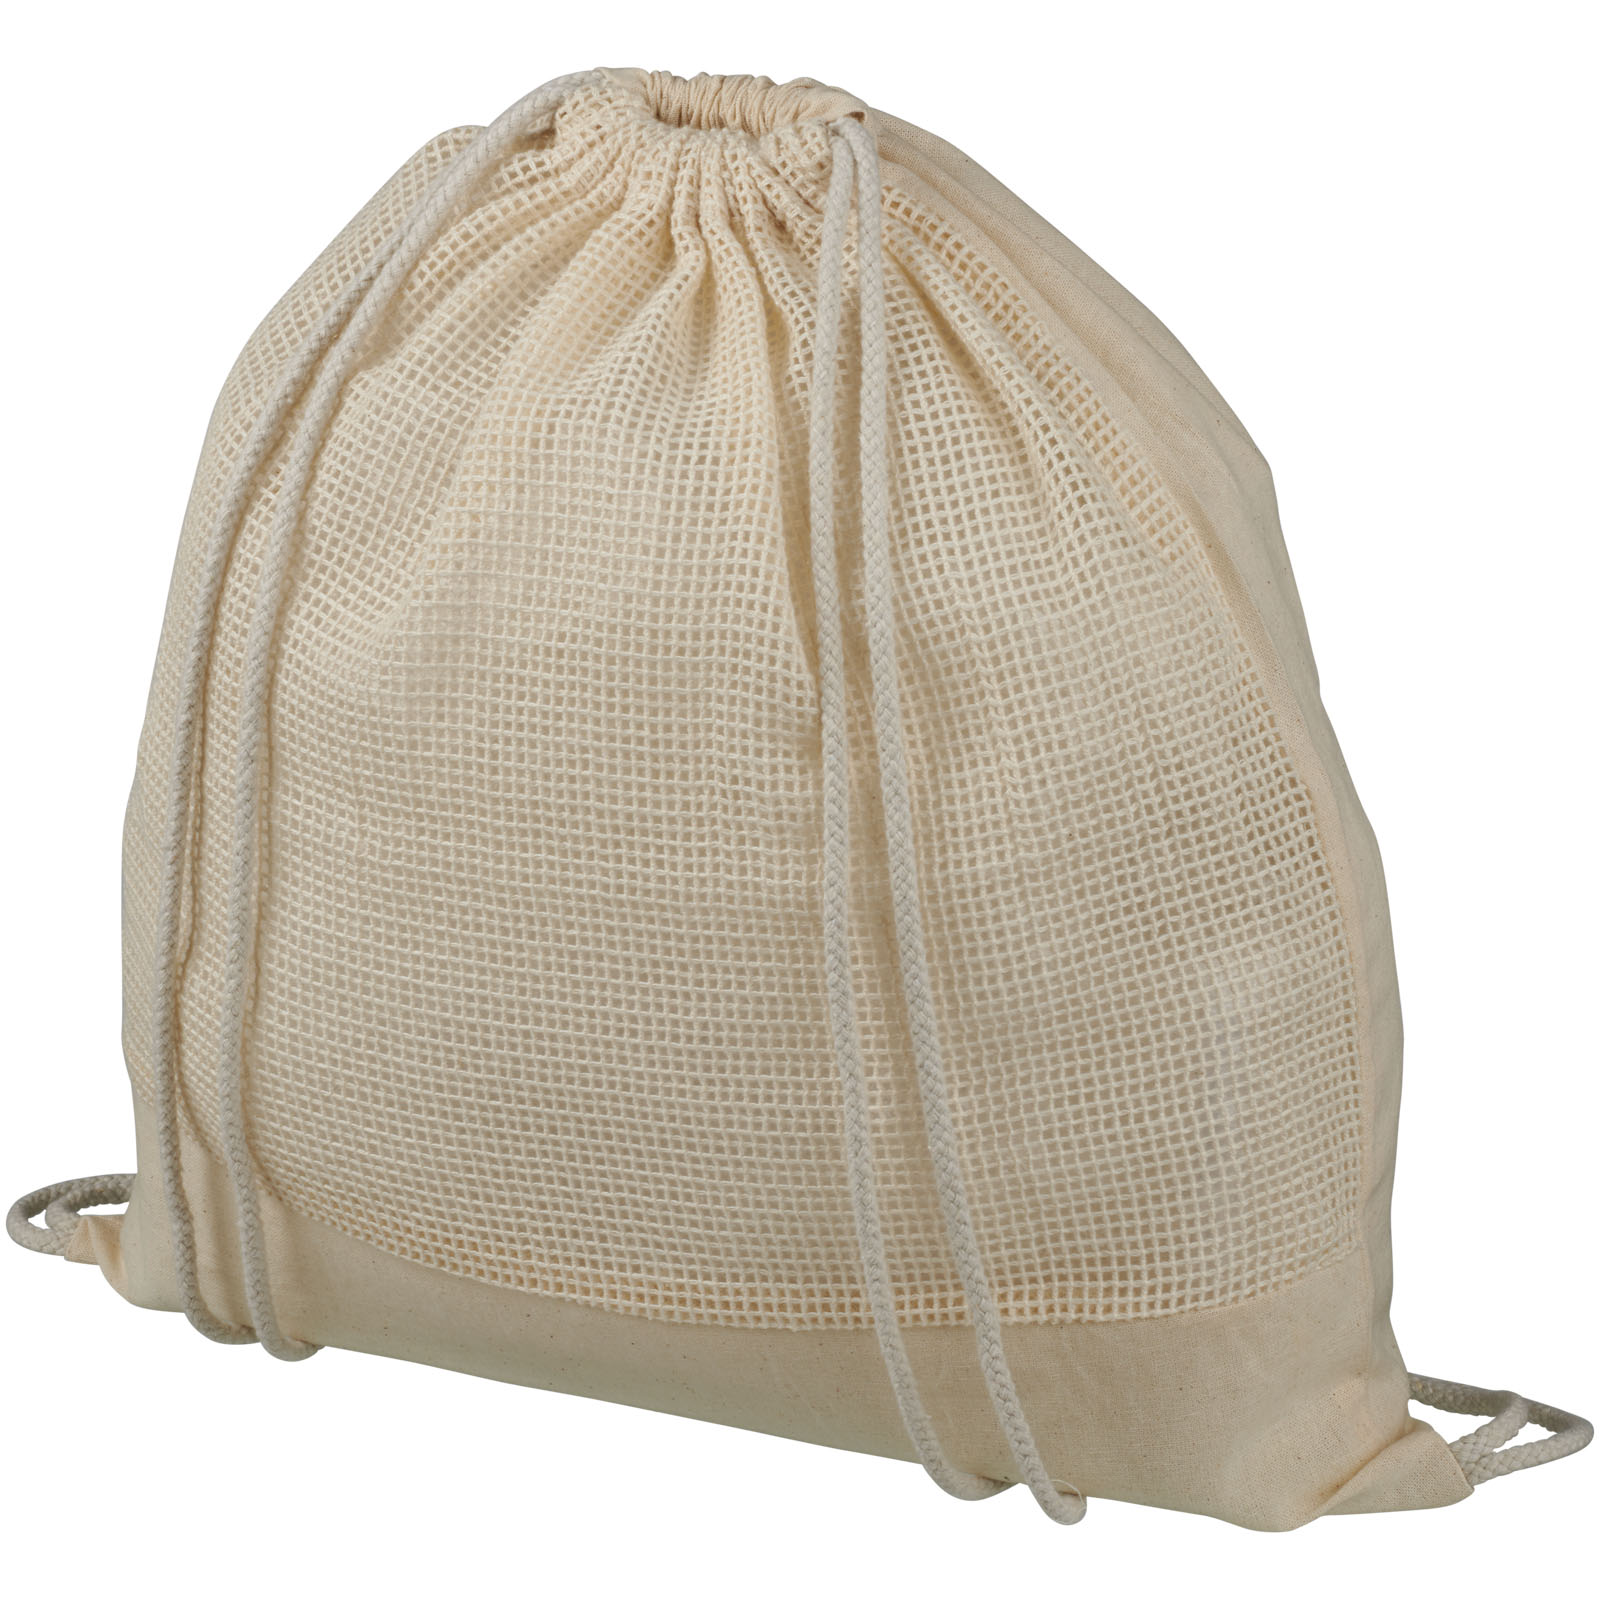 Advertising Drawstring Bags - Maine mesh cotton drawstring bag 5L